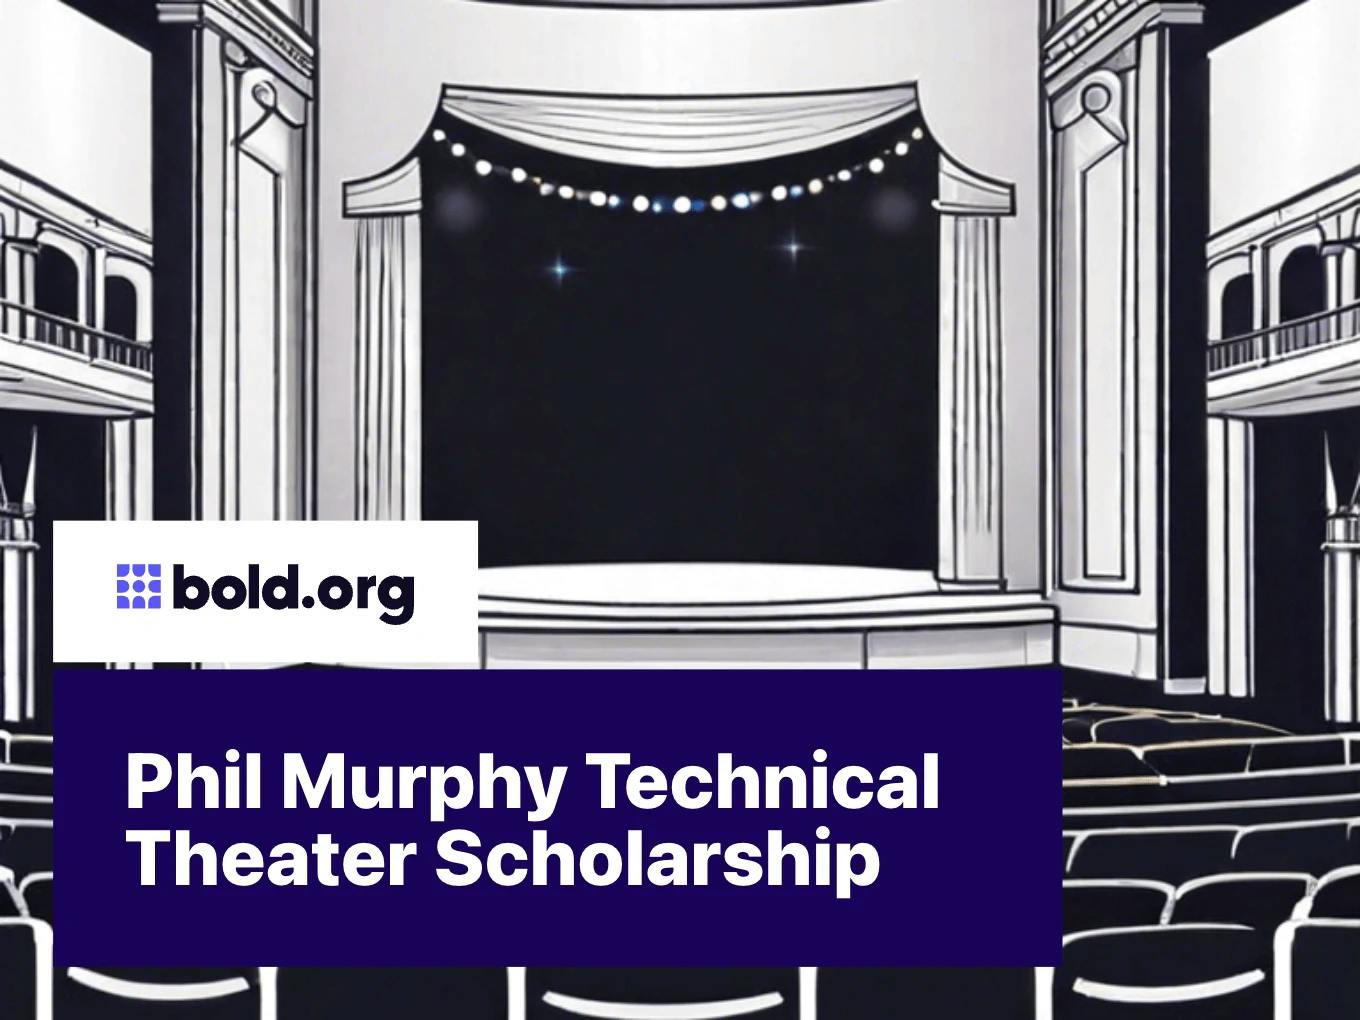 Phil Murphy Technical Theater Scholarship